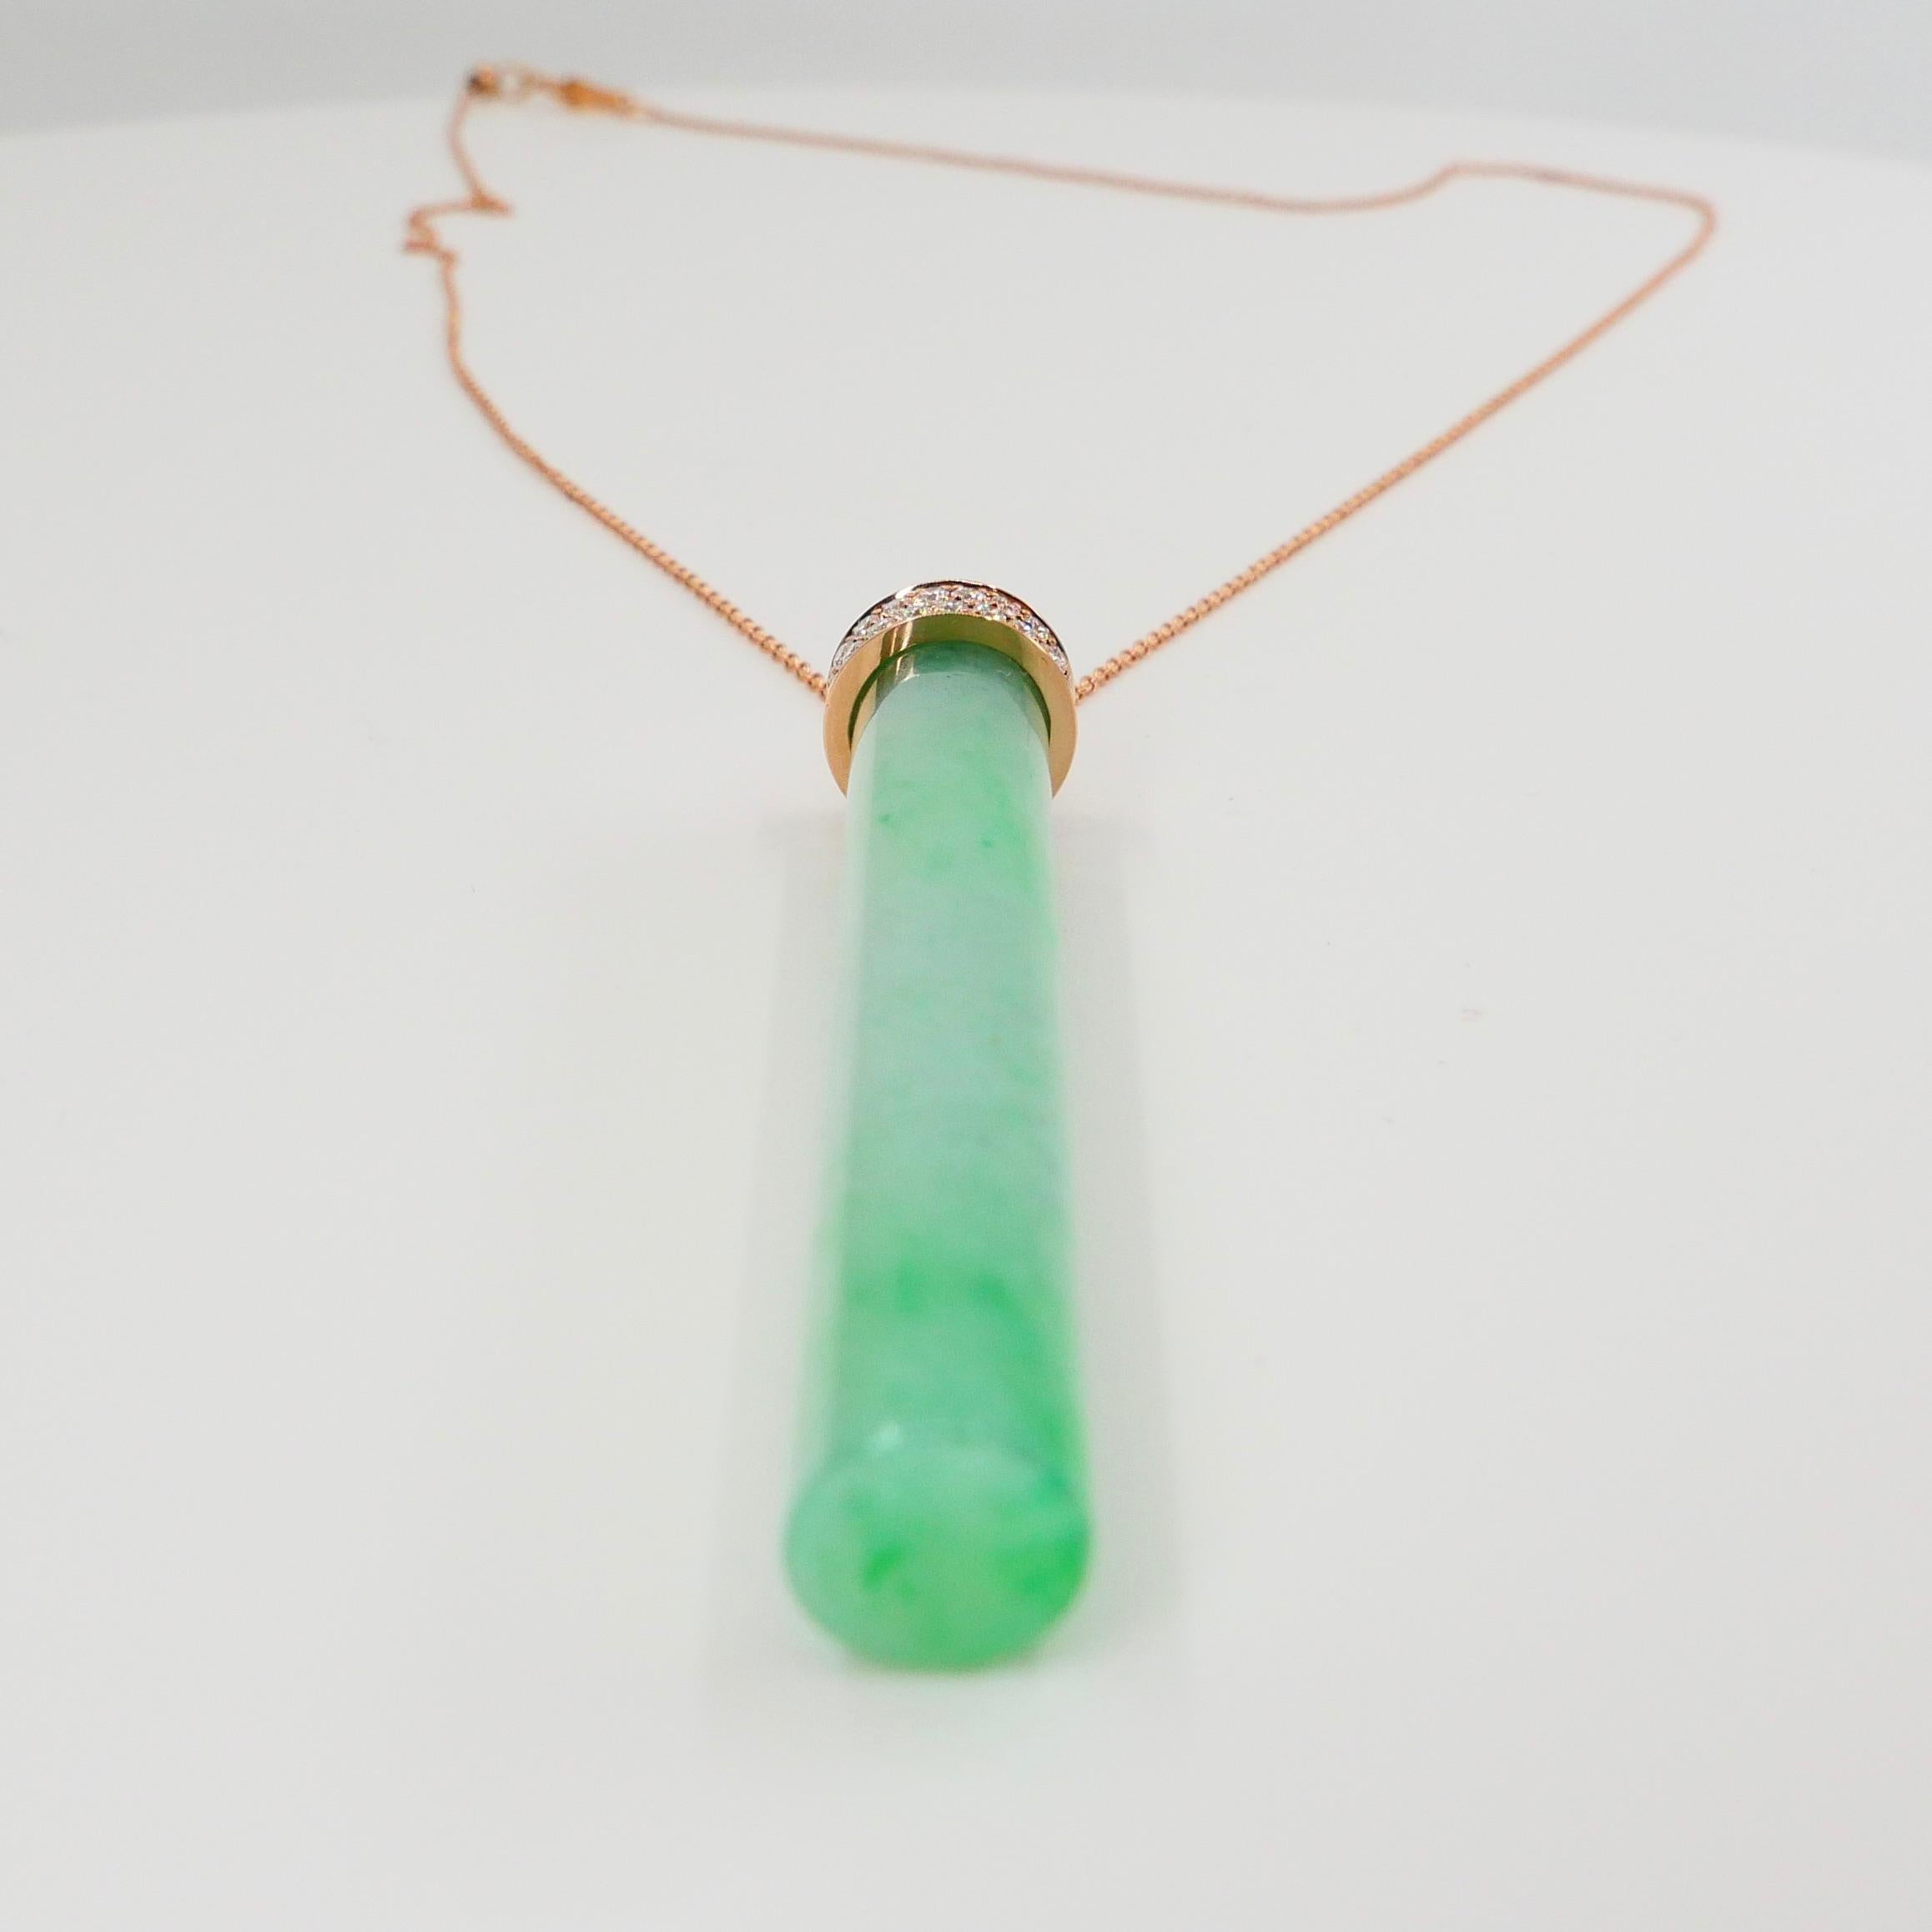 Certified Jadeite Jade and Diamond Pendant Drop Necklace, Icy Mint Green Jade 2